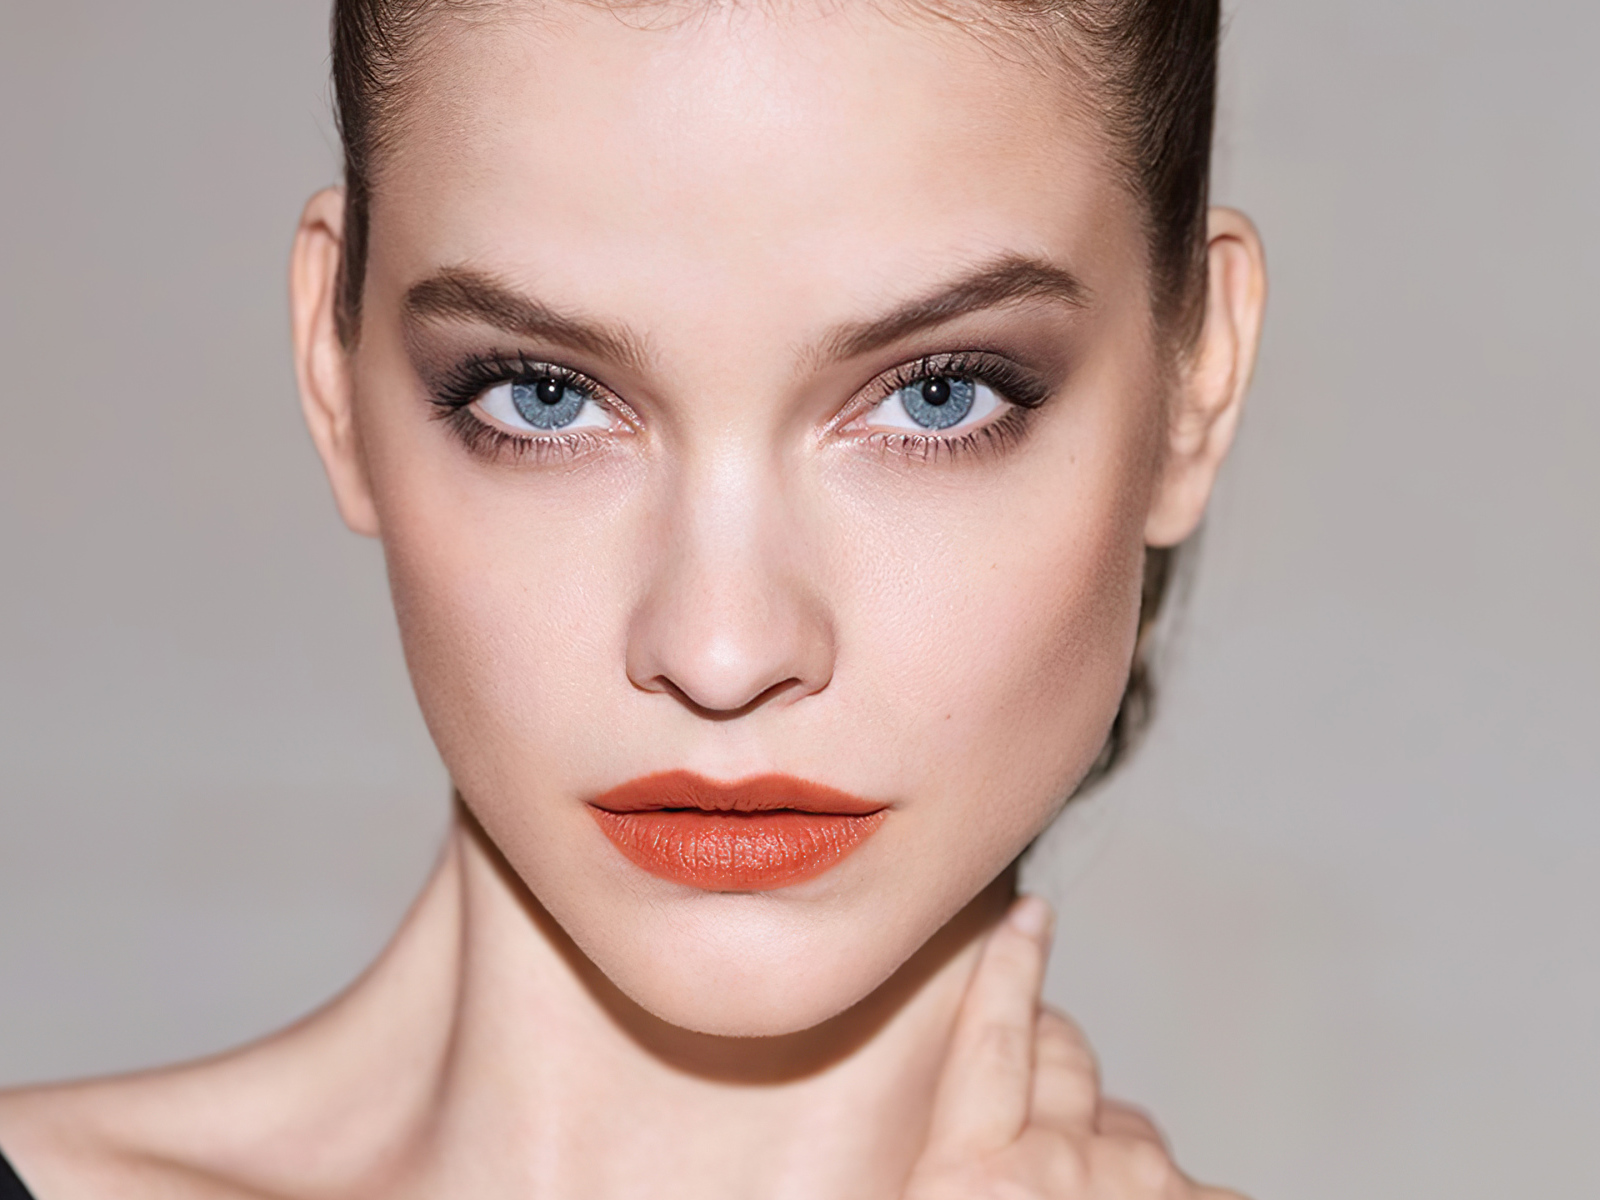 The face of blue-eyed model Barbara Palvin